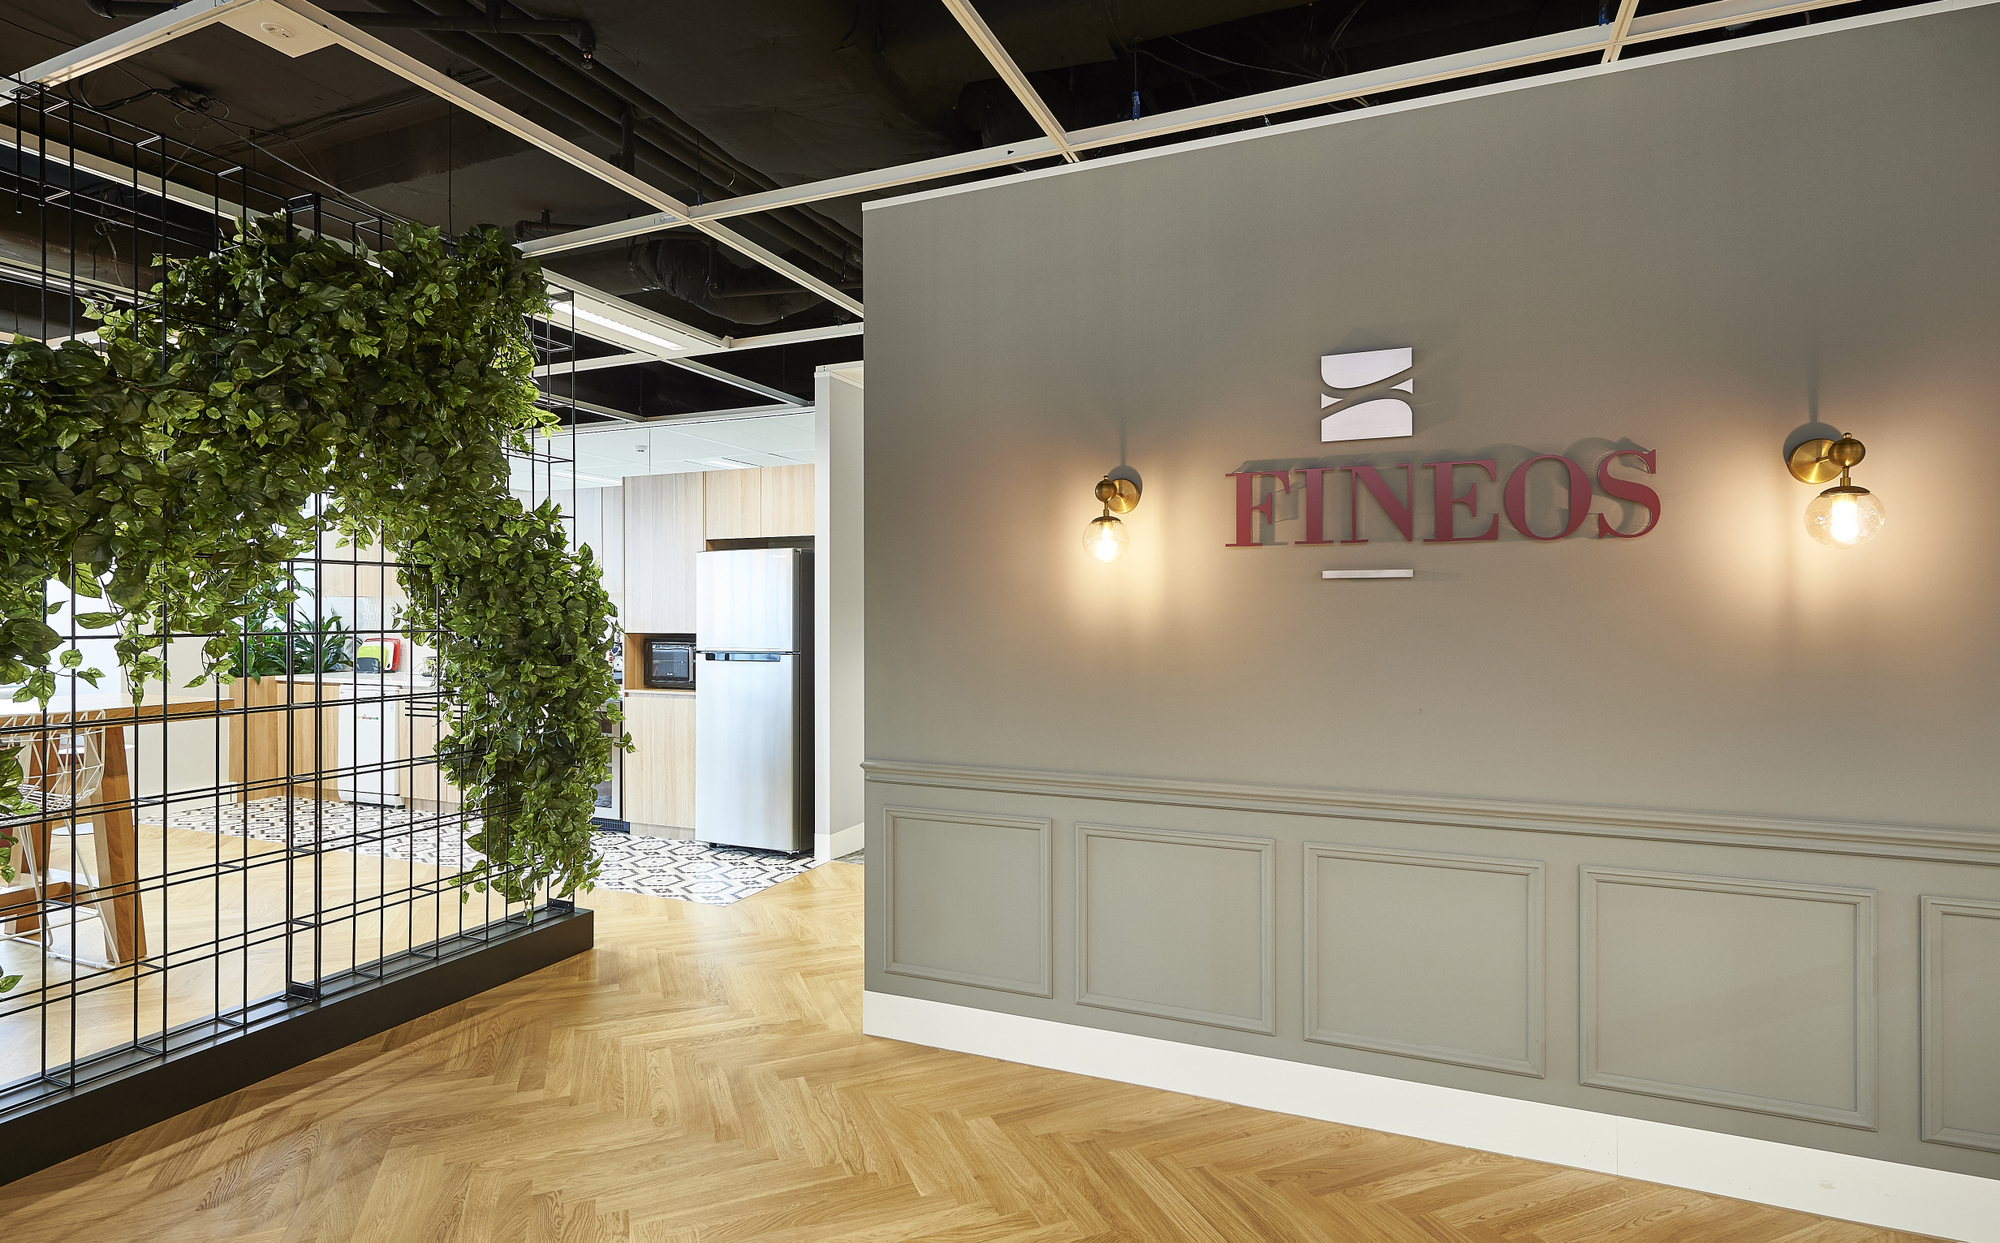 Fineos办公室——悉尼|ART-Arrakis | 建筑室内设计的创新与灵感